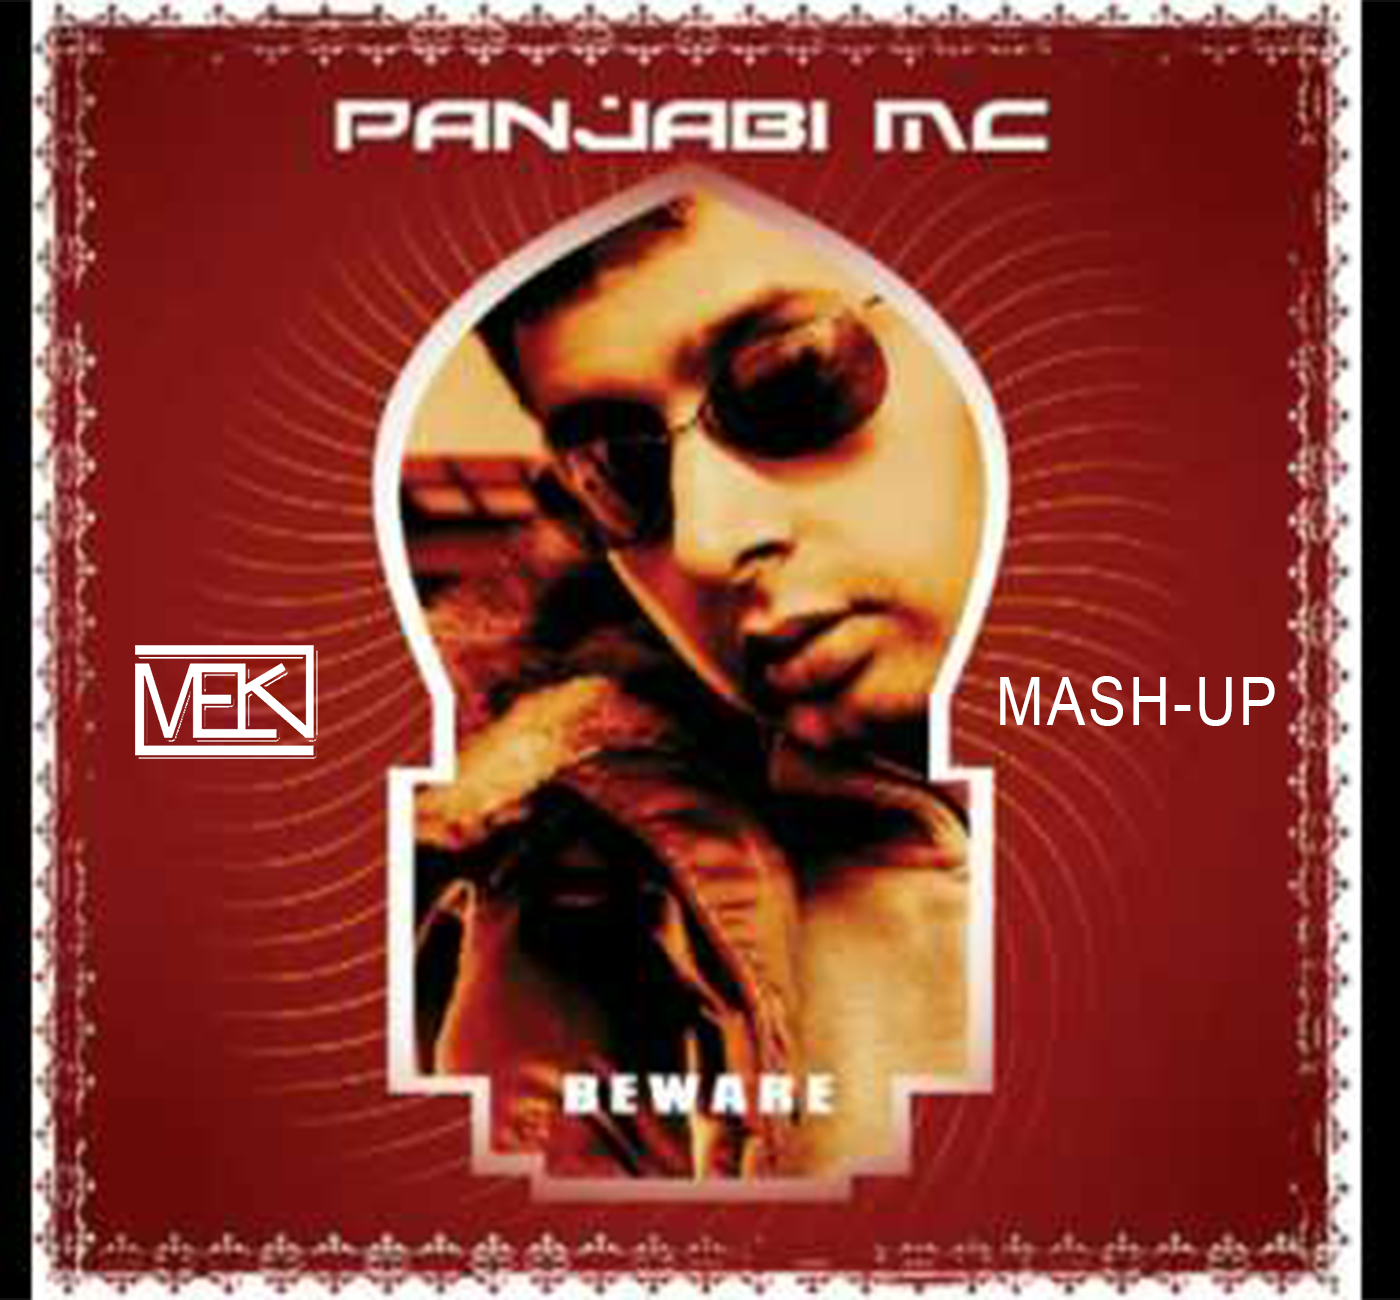 Panjabi mc слушать. Panjabi MC Beware. Panjabi MC Mundian to Bach ke. Panjabi MC фото. Panjabi MC album the album.